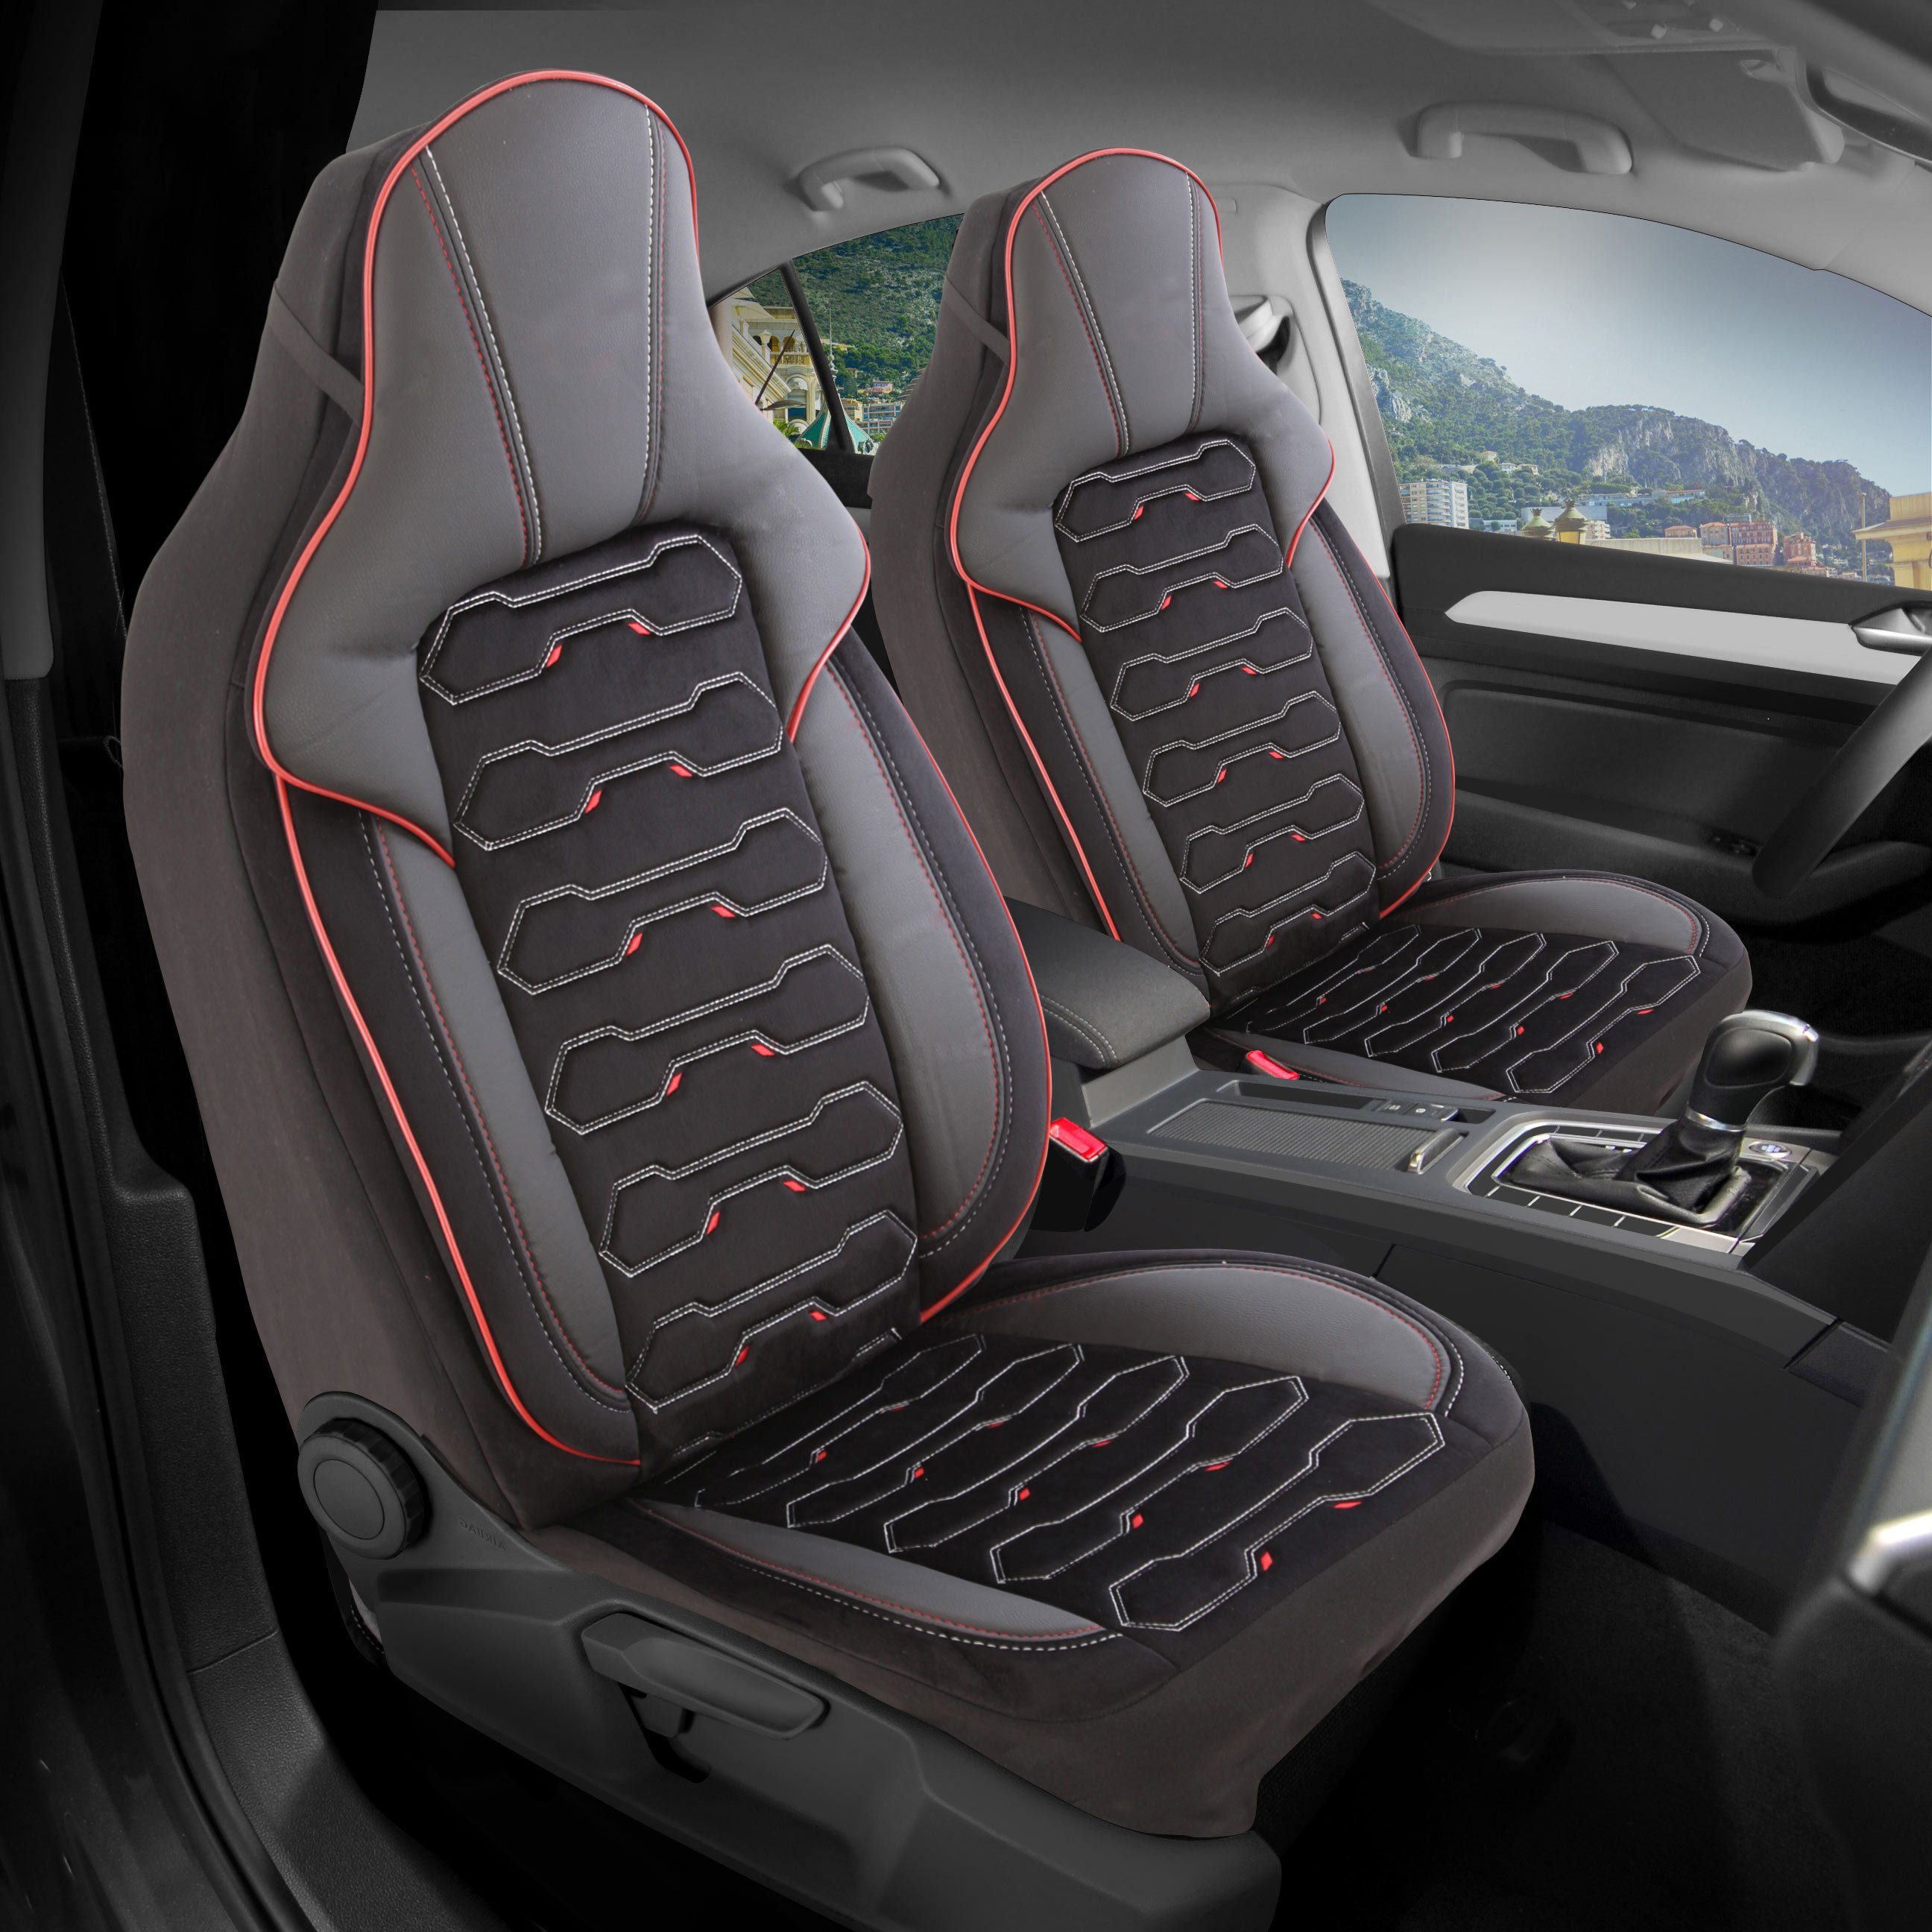 Audi 1 geeignet Class), Fahrersitzbezug, Airbag RoyalClass® für Sitzbezüge Autositzbezug (Schwarz-Rot Beifahrersitzbezug, 1 passend für Set, A1